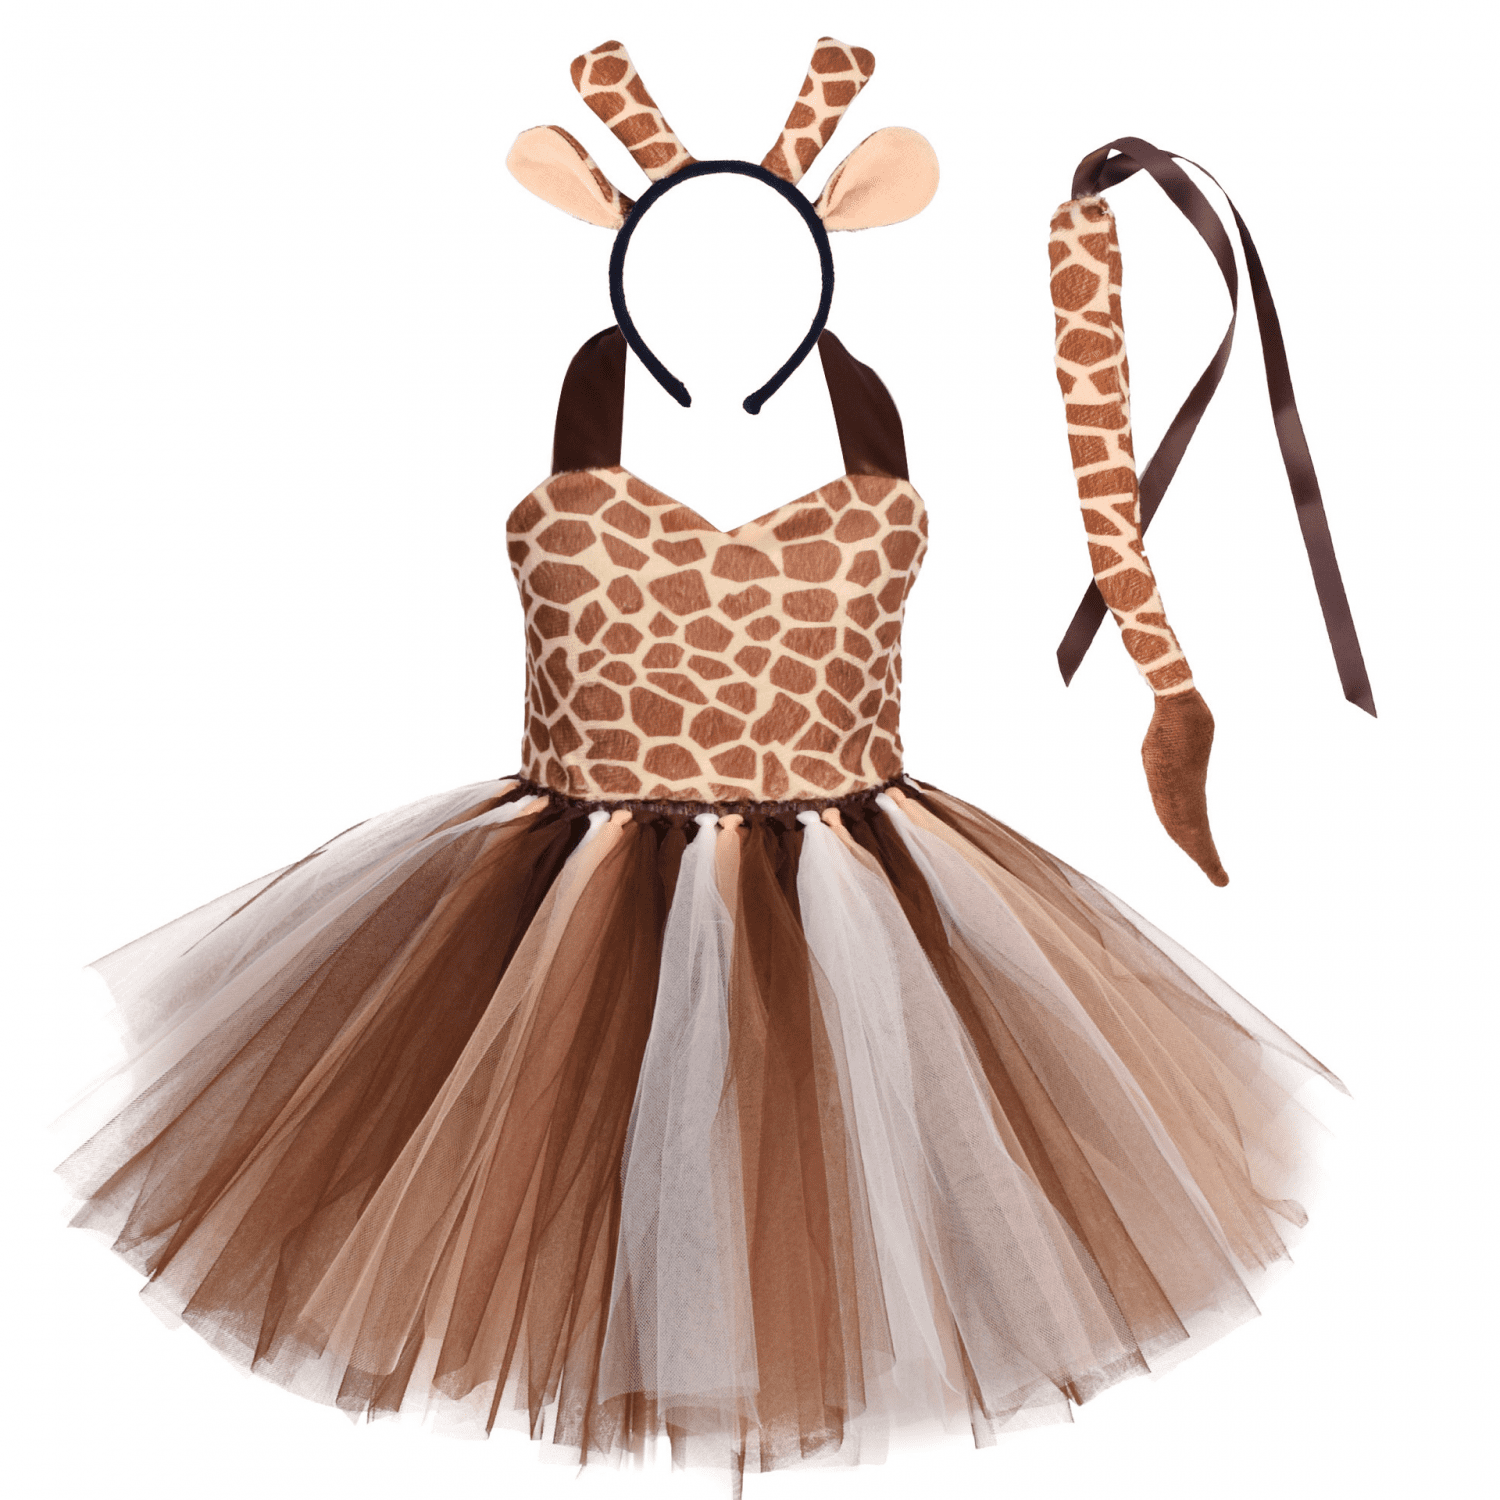 All Animal Ears Headband Tail Safari Fancy Dress Costume Outfit Children Adult 